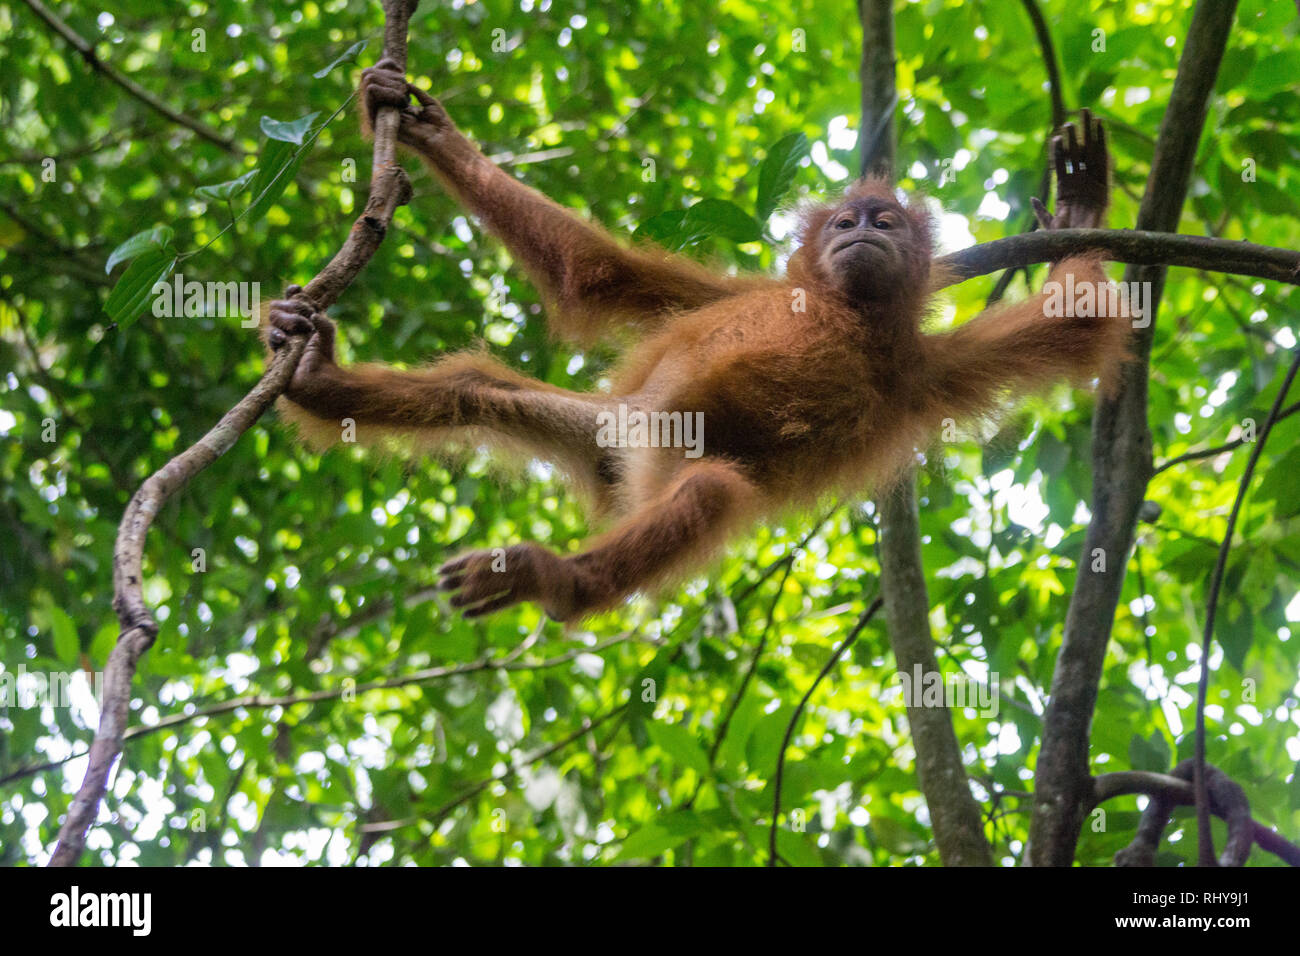 a cute baby orangutan in the Forests of Bukit Lawang on Sumatra Stock Photo